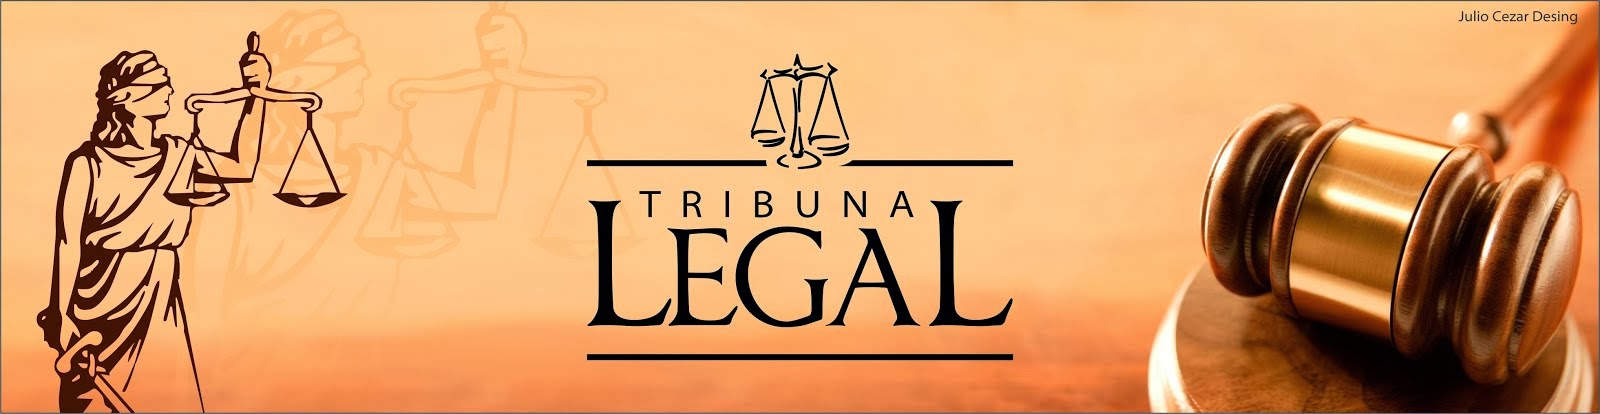 Tribuna Legal